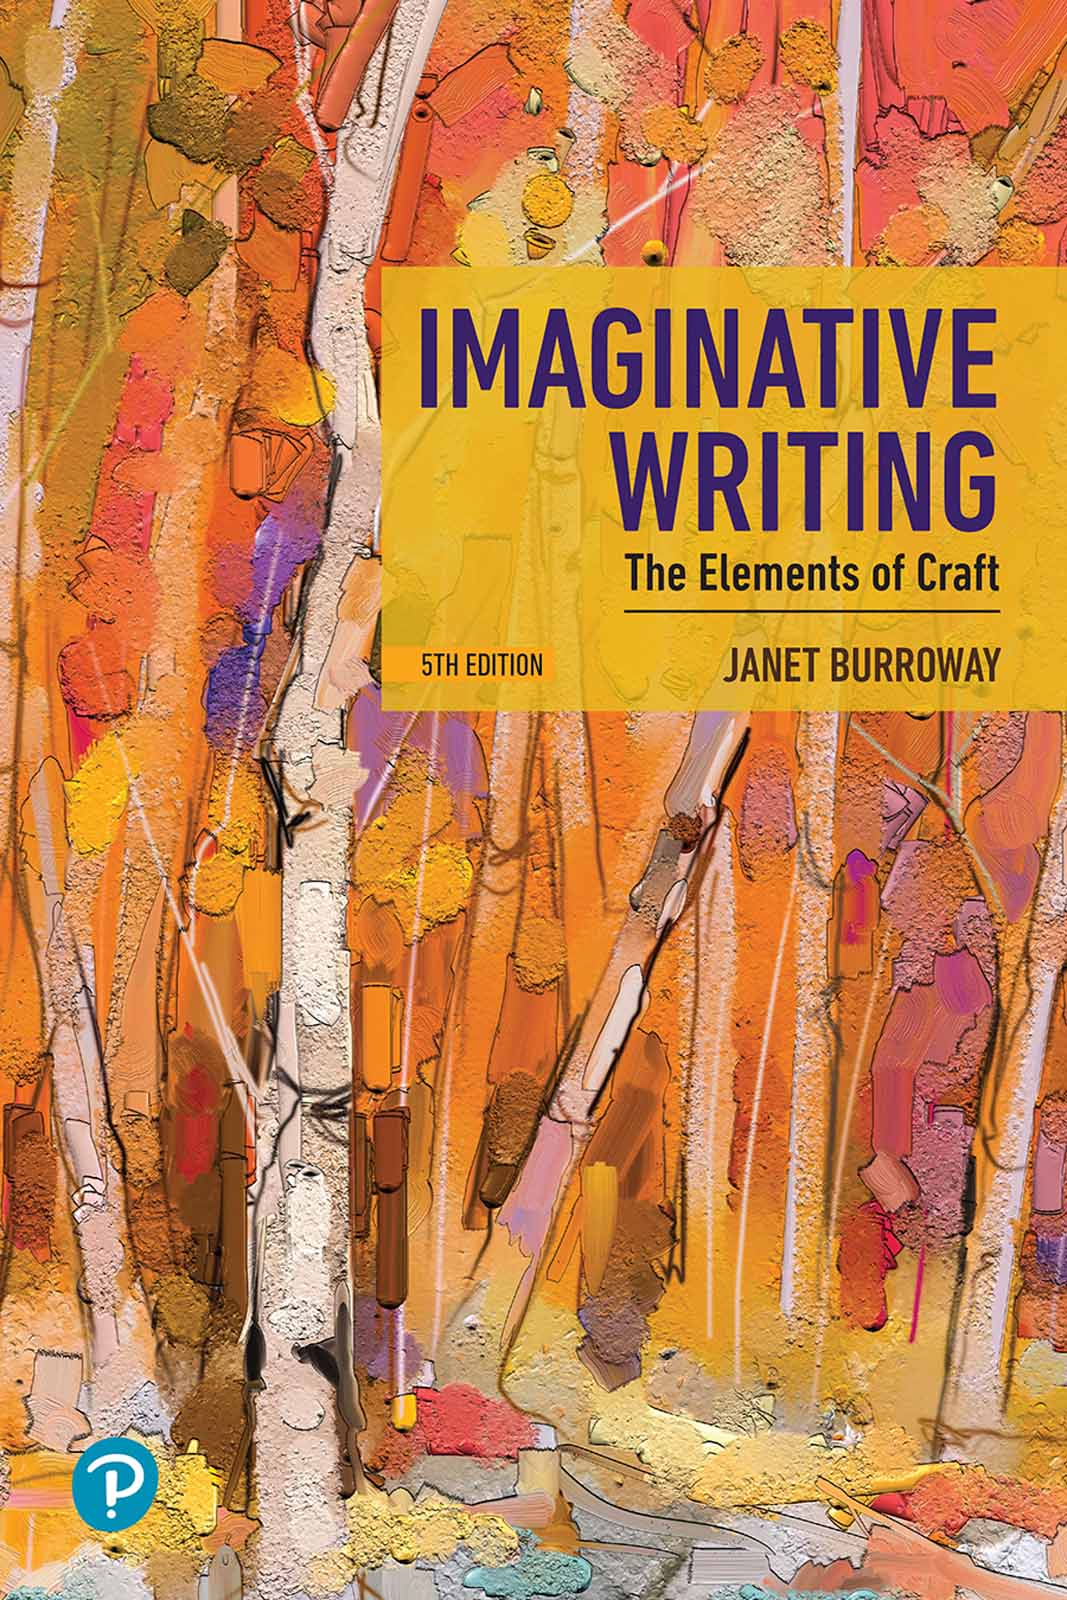 Imaginative Writing